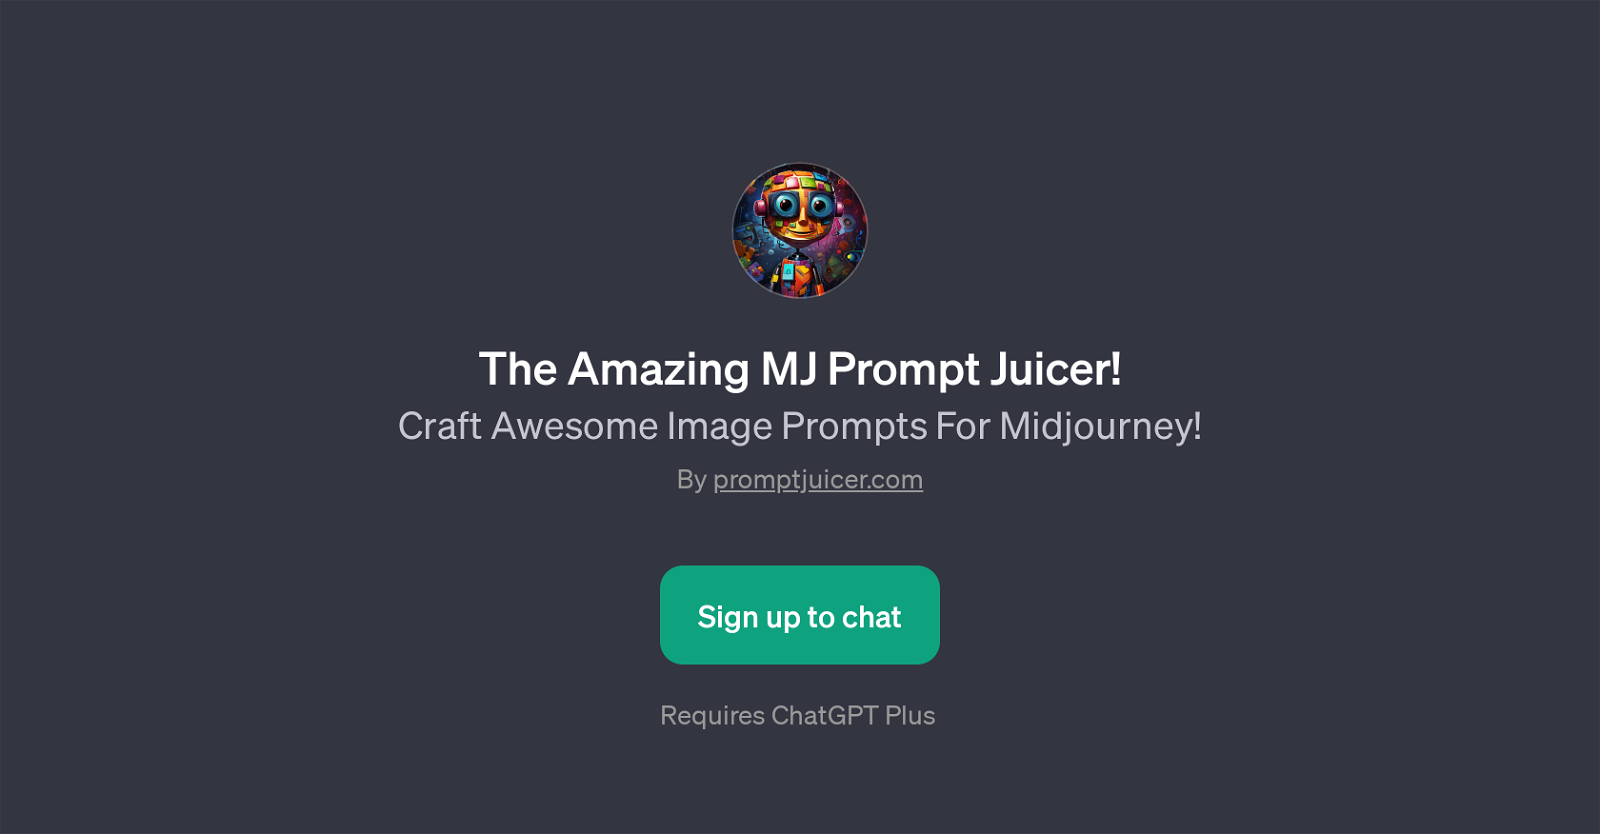 The Amazing MJ Prompt Juicer website